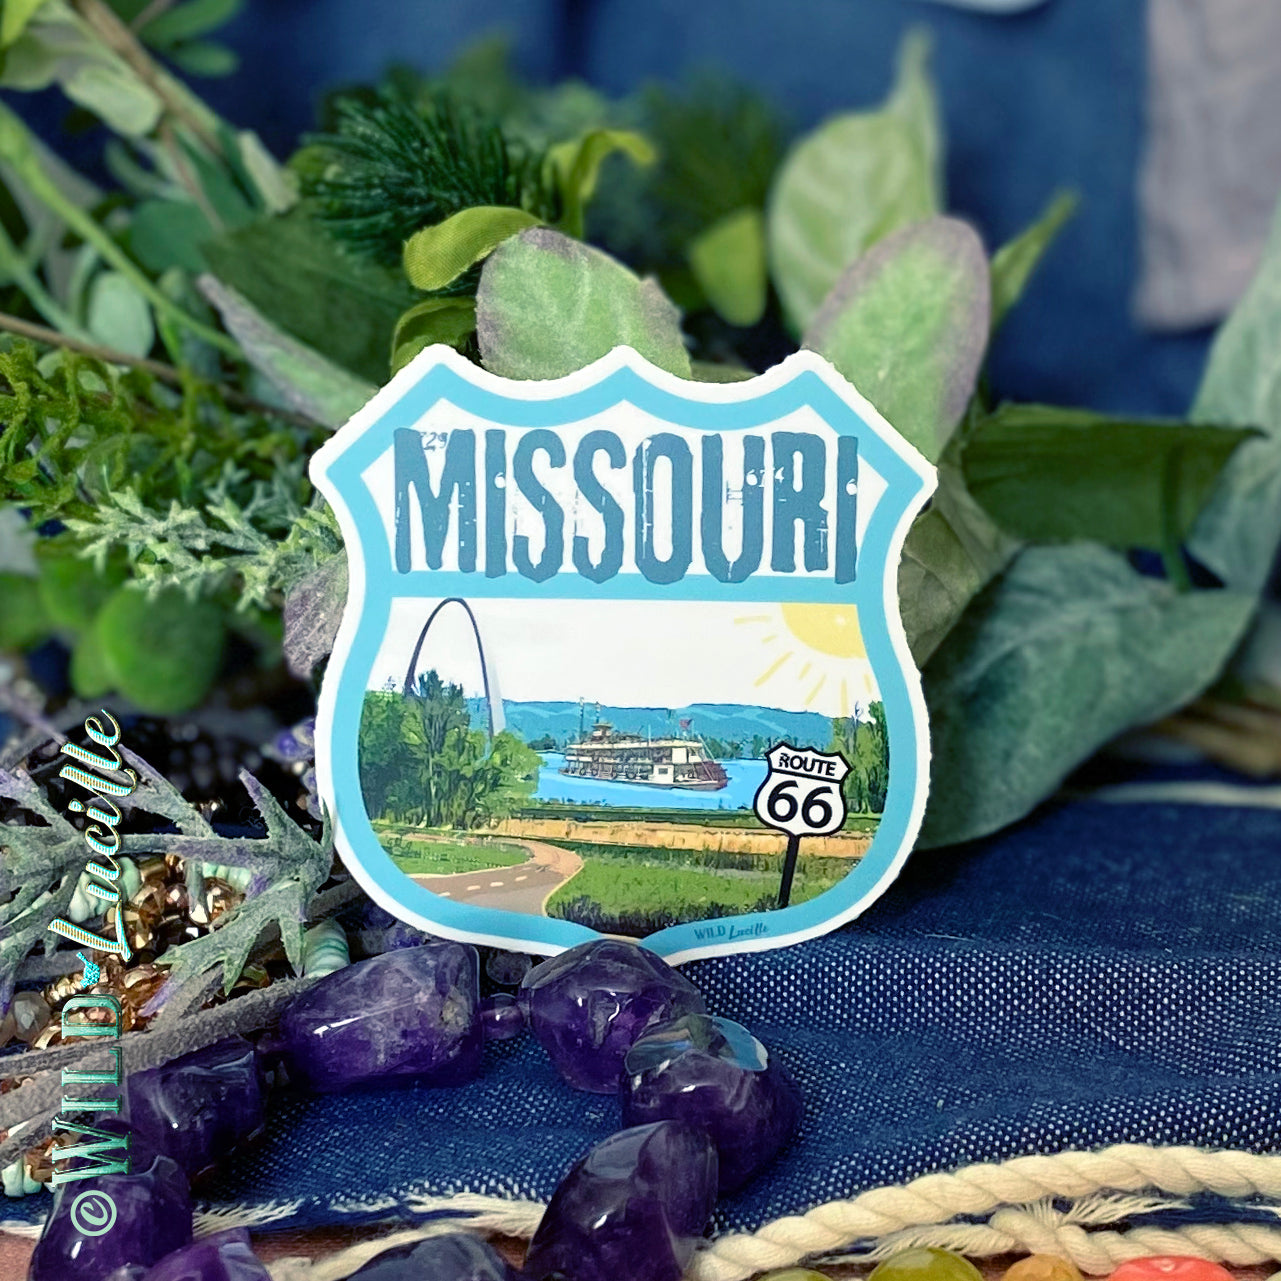 Missouri Tourist - Travel Souvenir Vinyl Decal